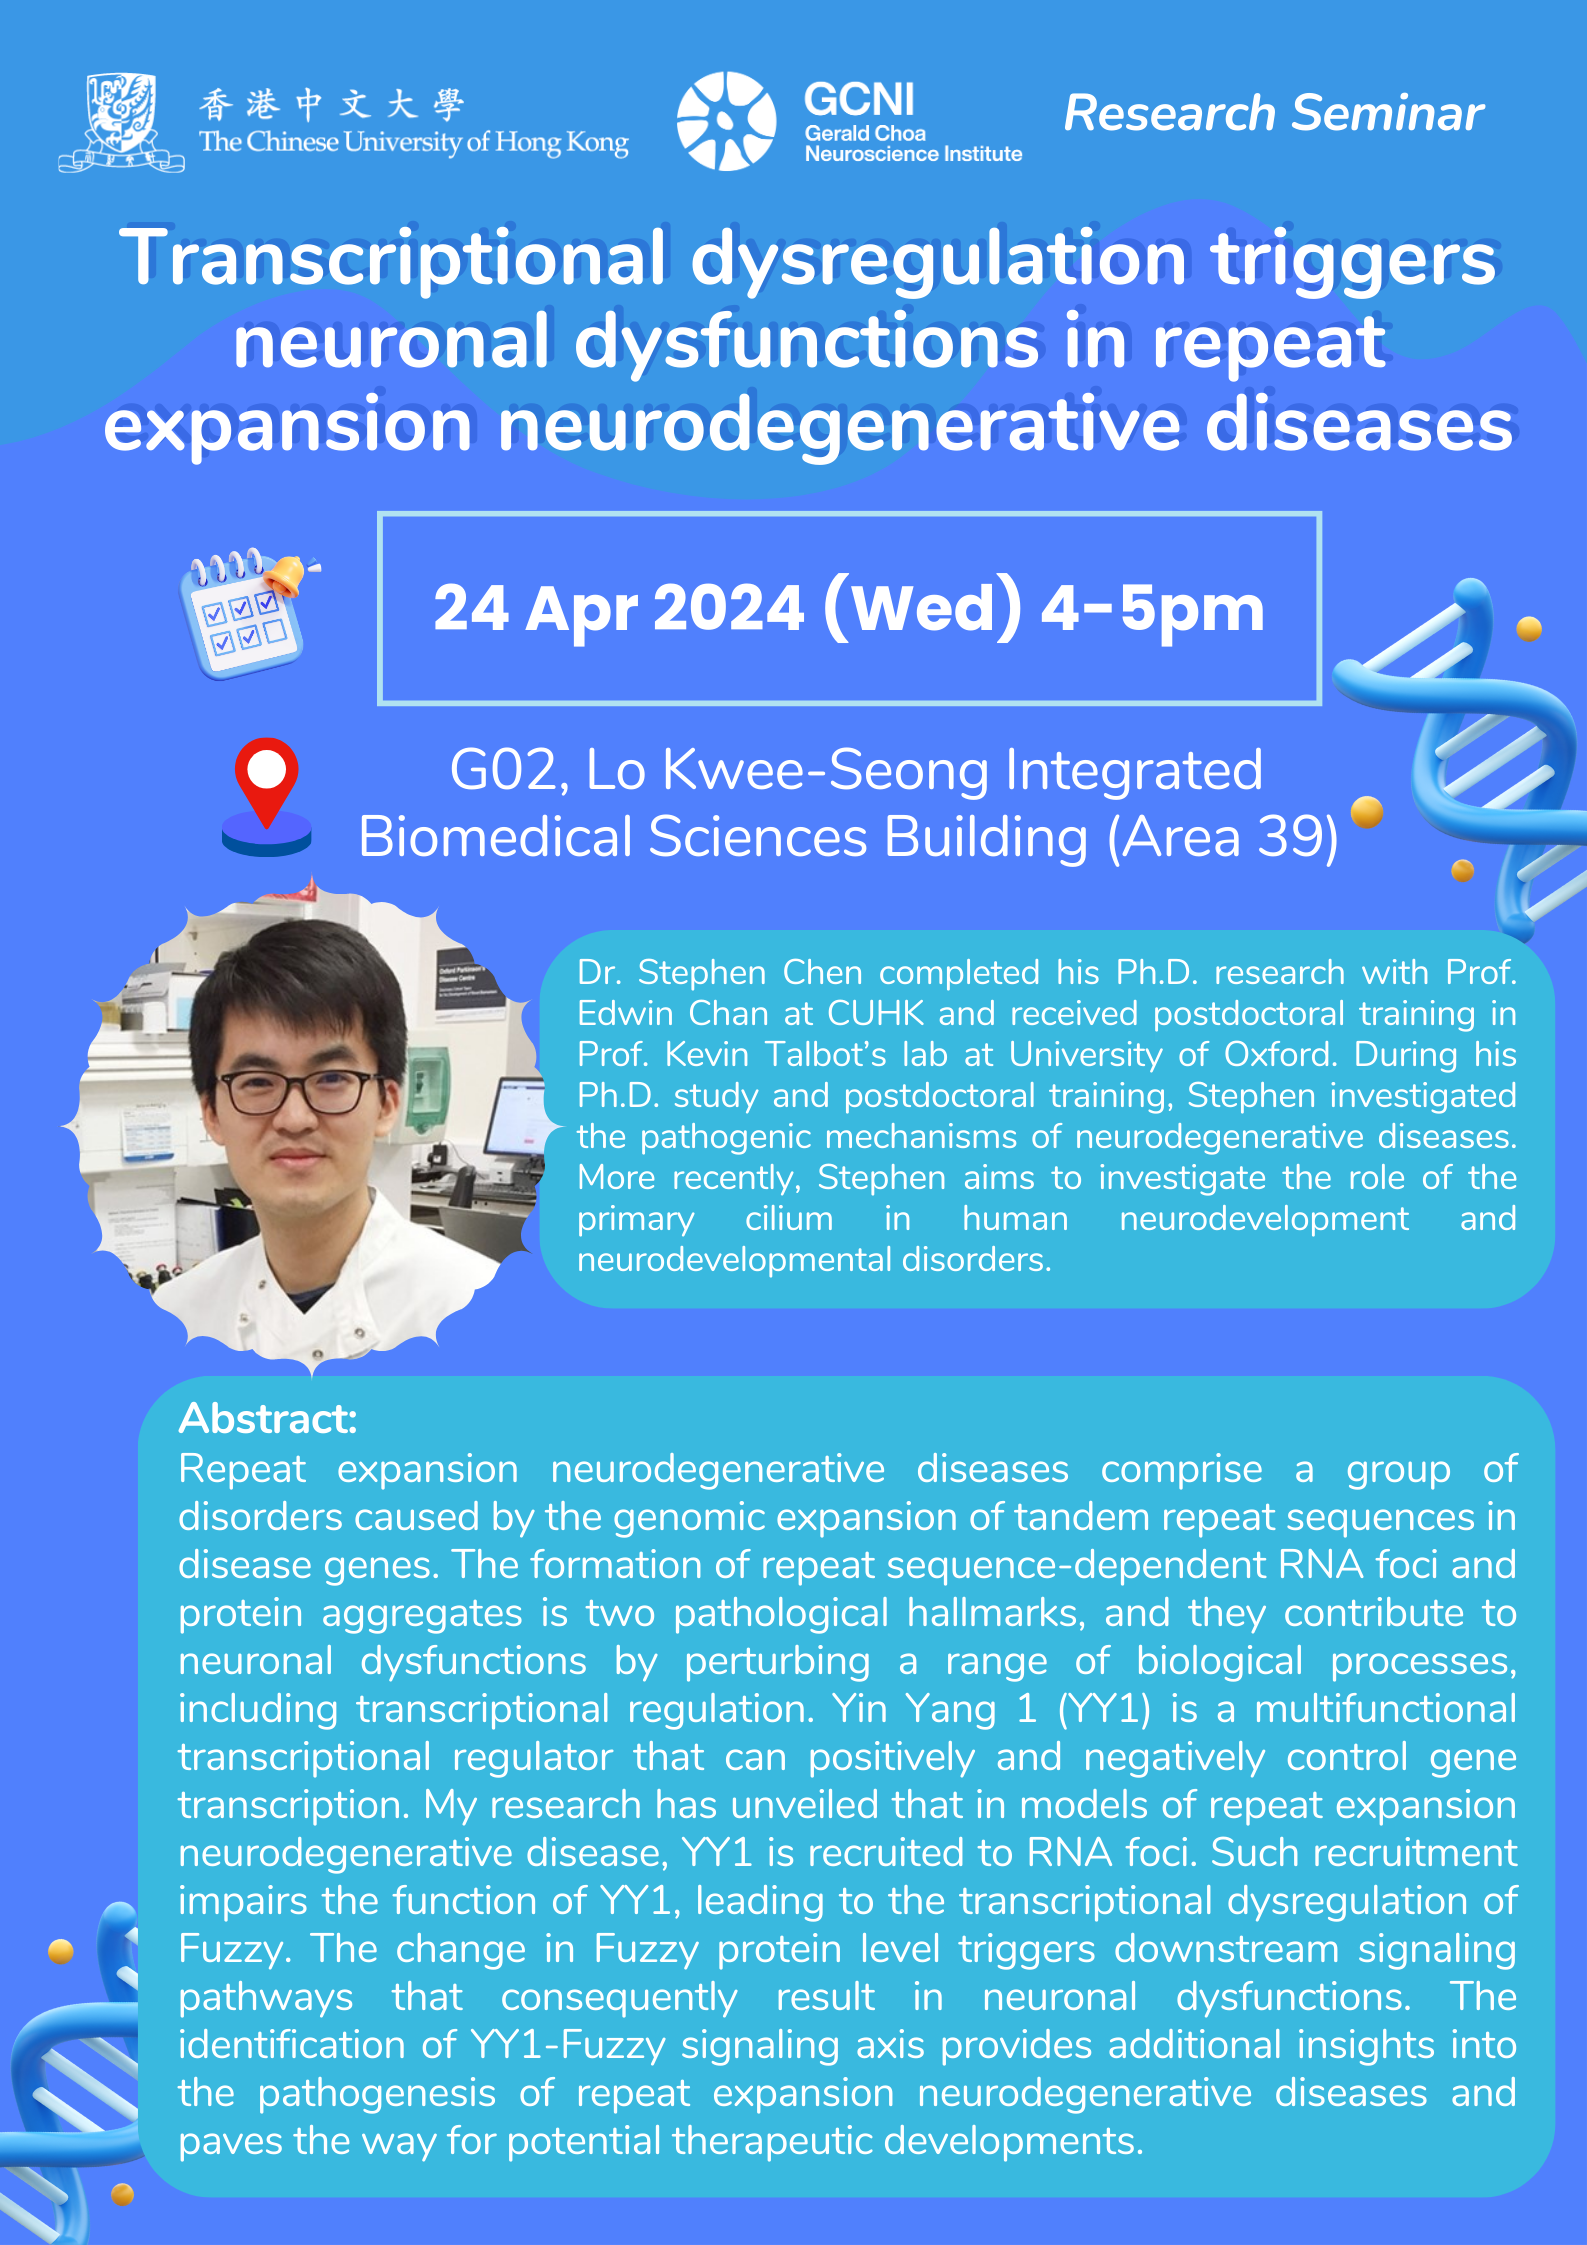 Research Seminar: Transcriptional dysregulation triggers neuronal dysfunctions in repeat expansion neurodegenerative diseases